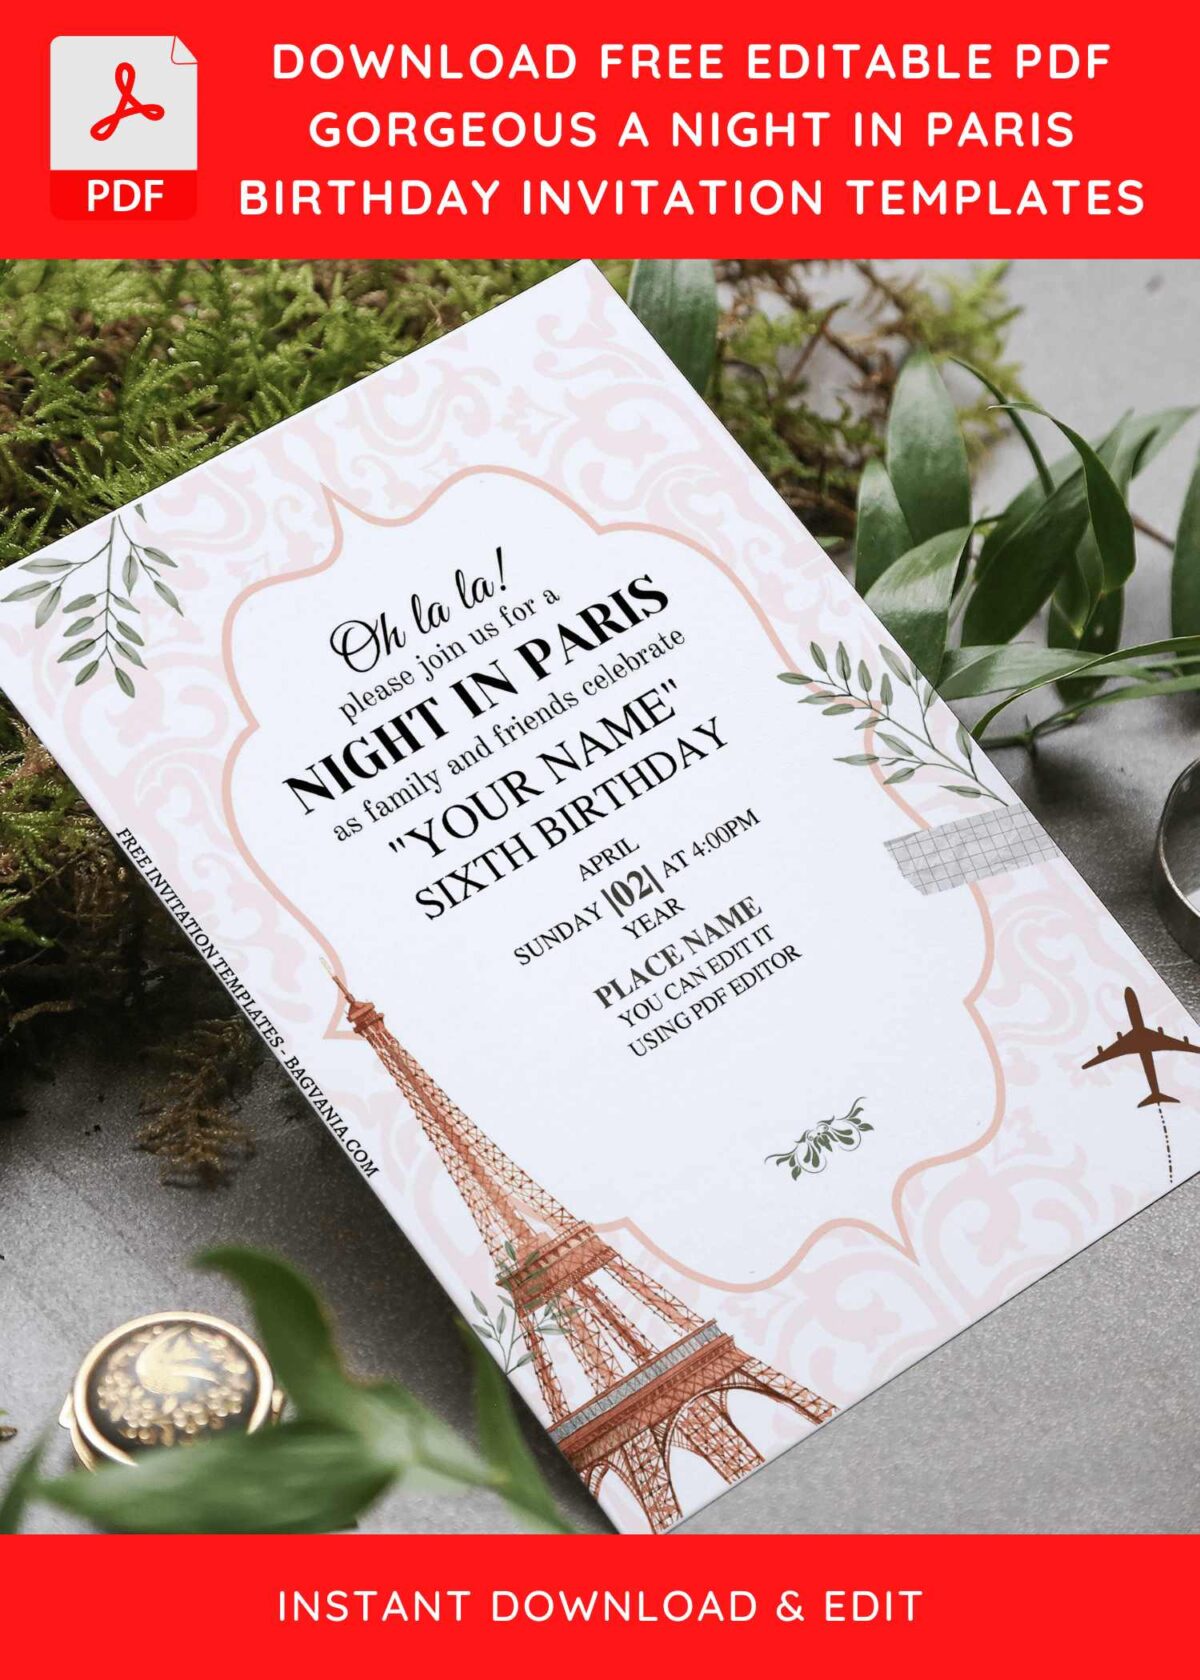 (Free Editable PDF) Vintage Paris Birthday Party Invitation Templates F